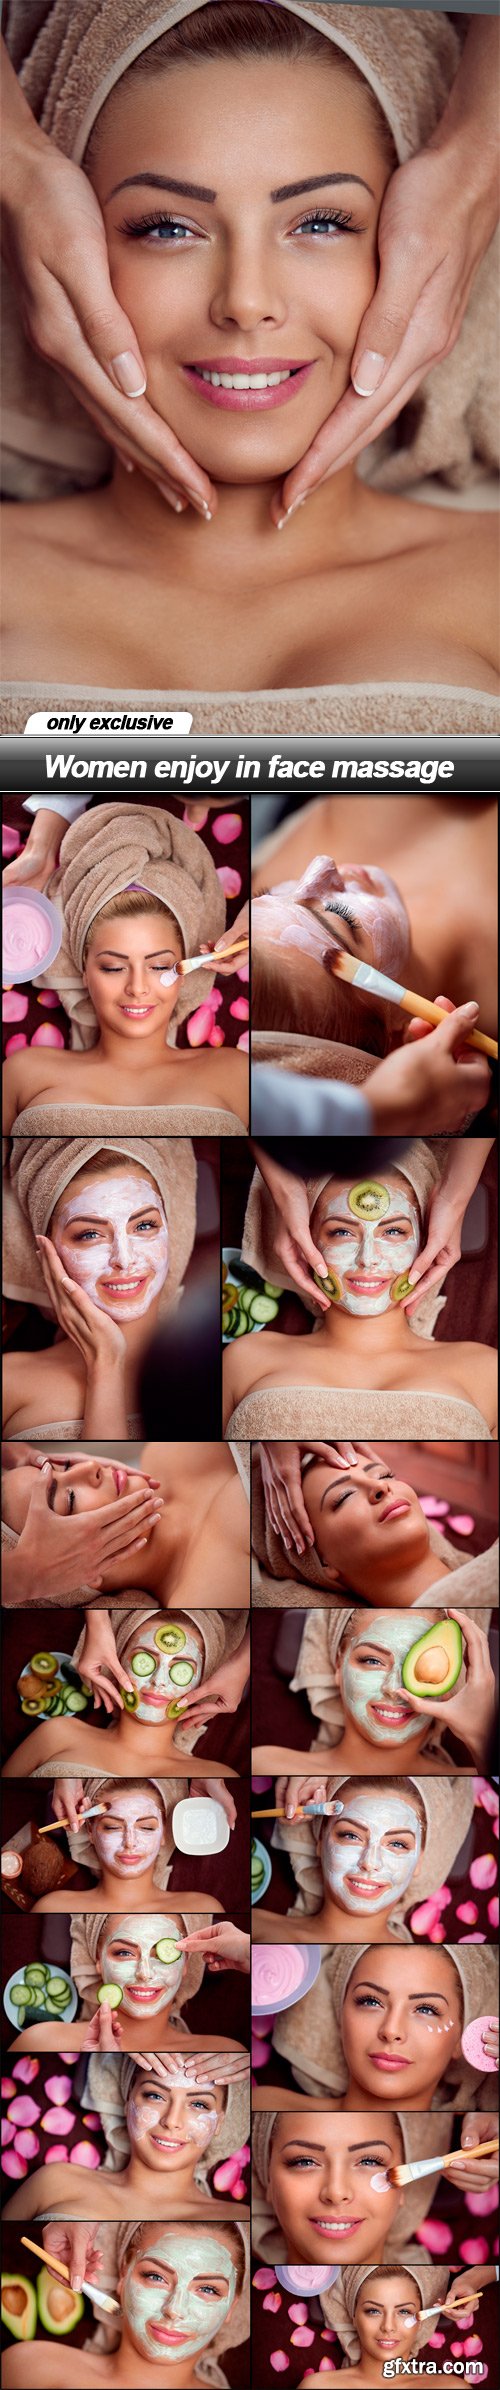 Women enjoy in face massage - 17 UHQ JPEG